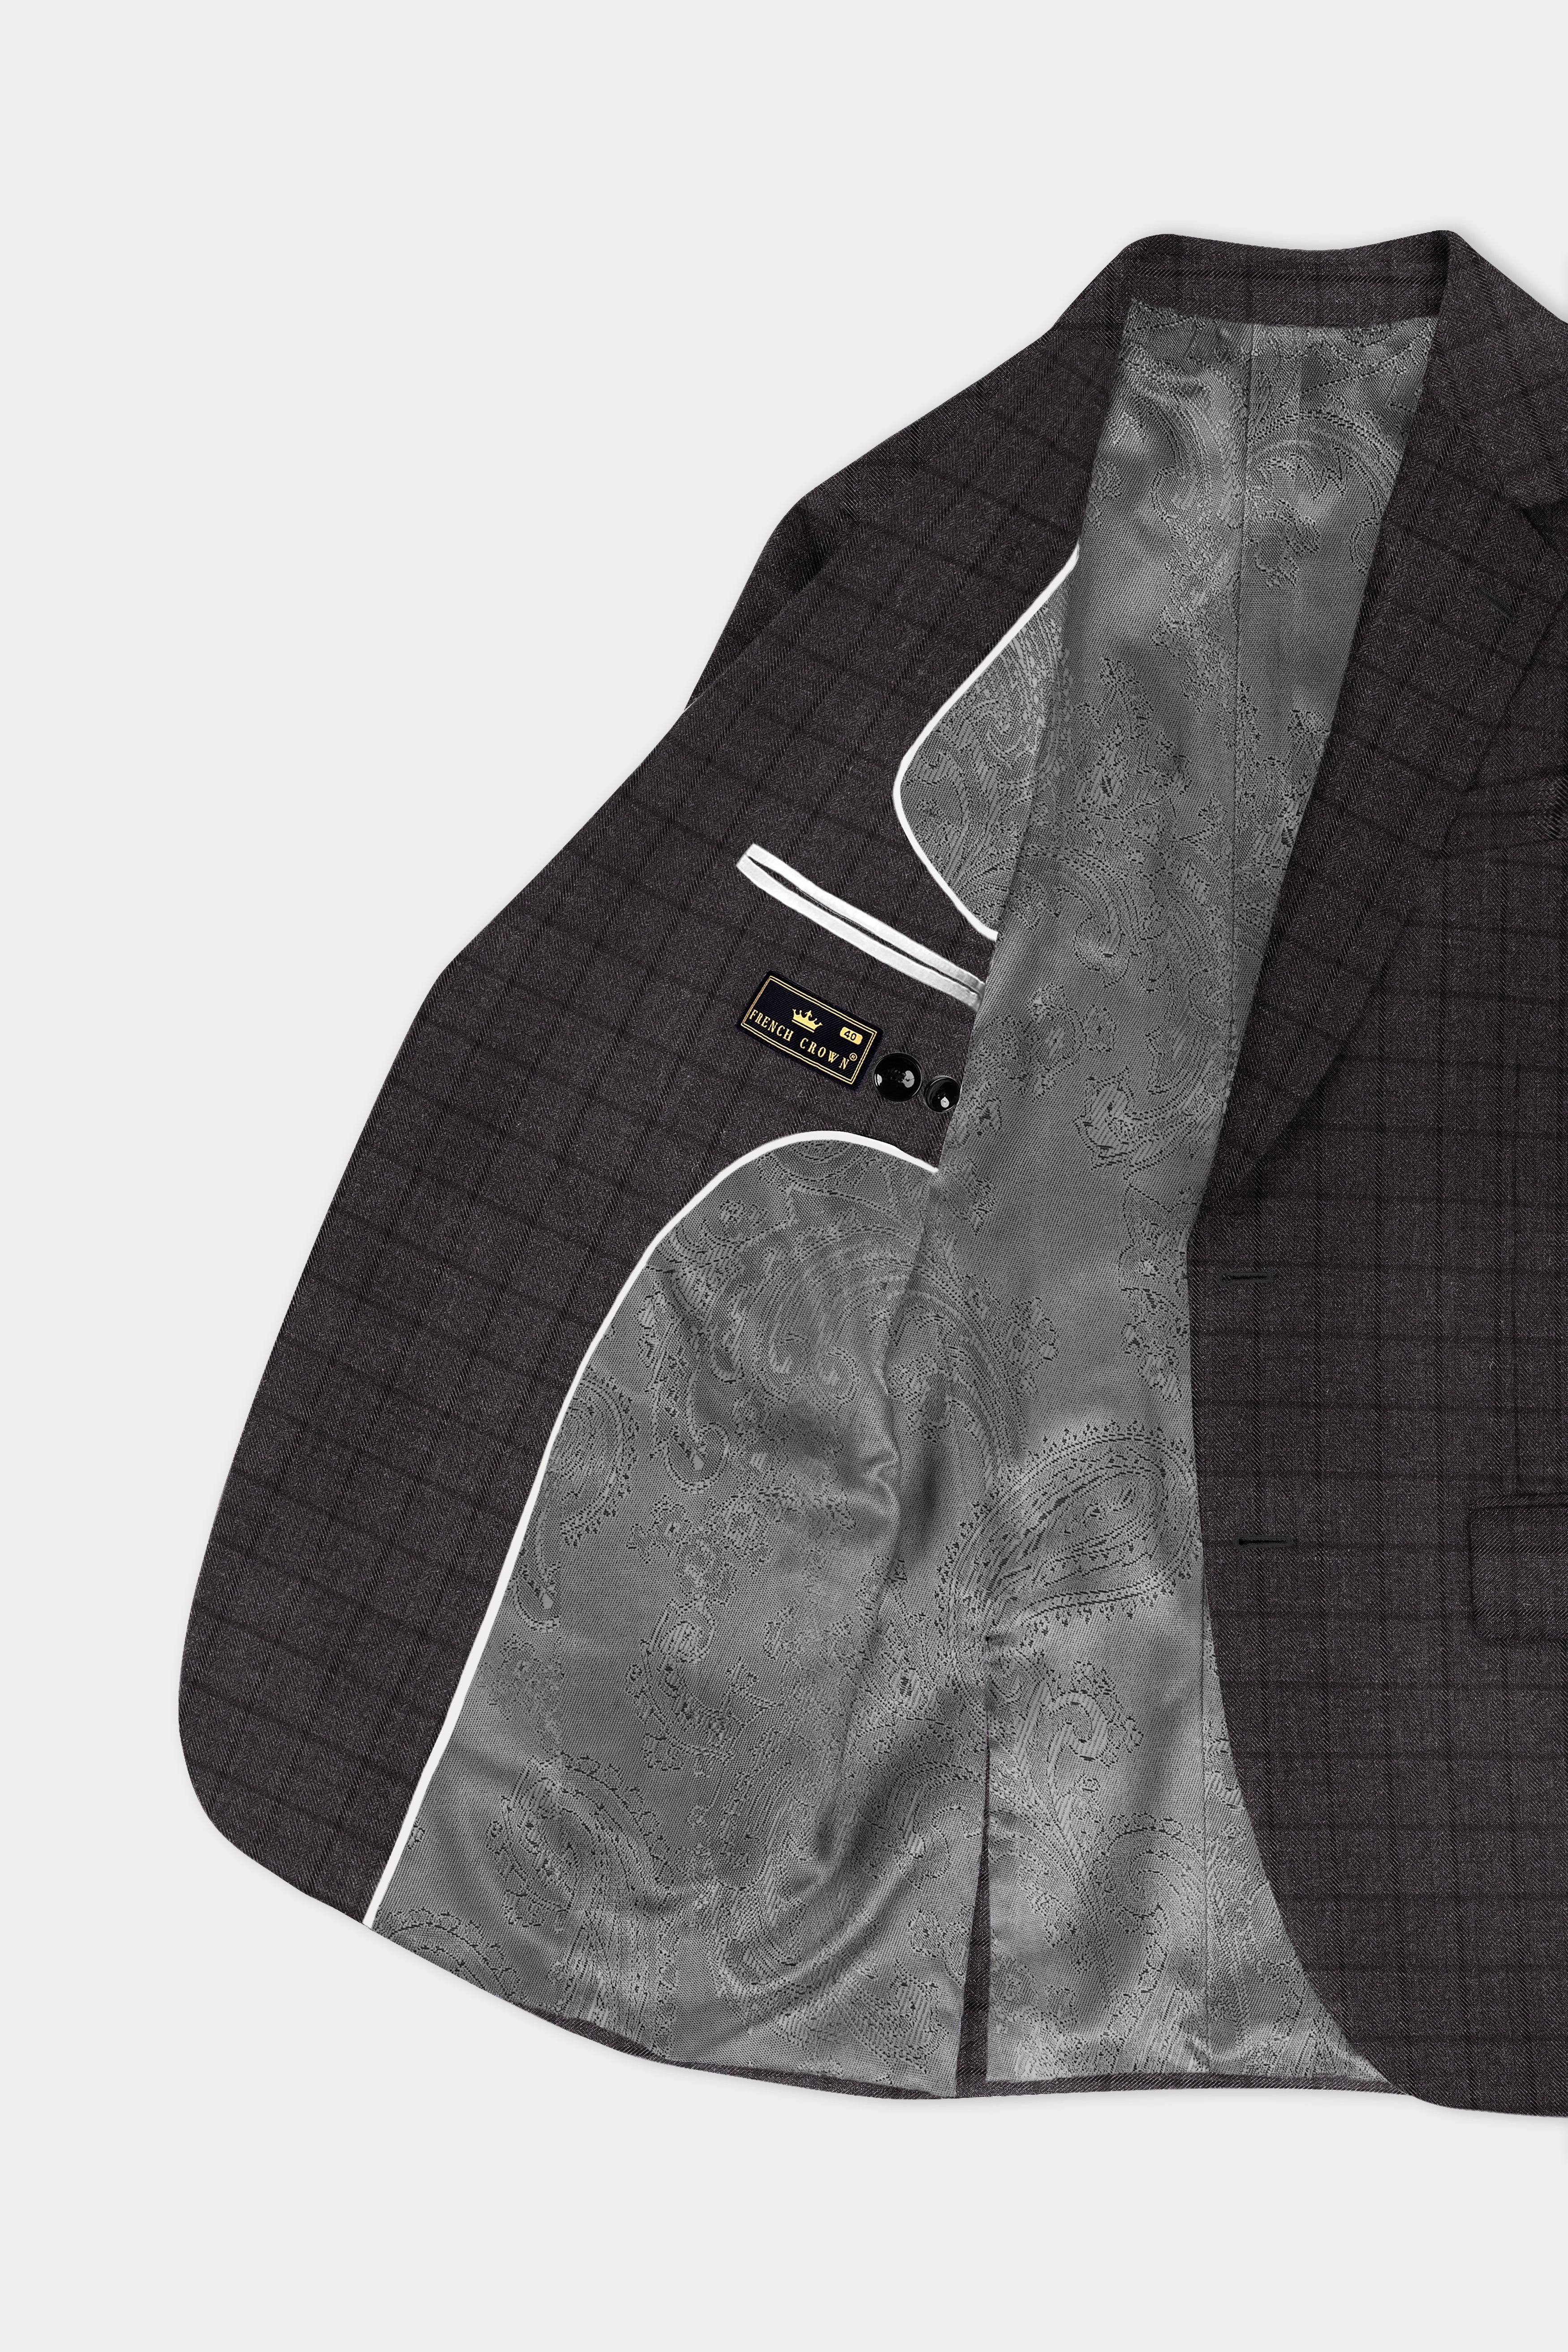 Thunder Gray Windowpane Tweed Suit